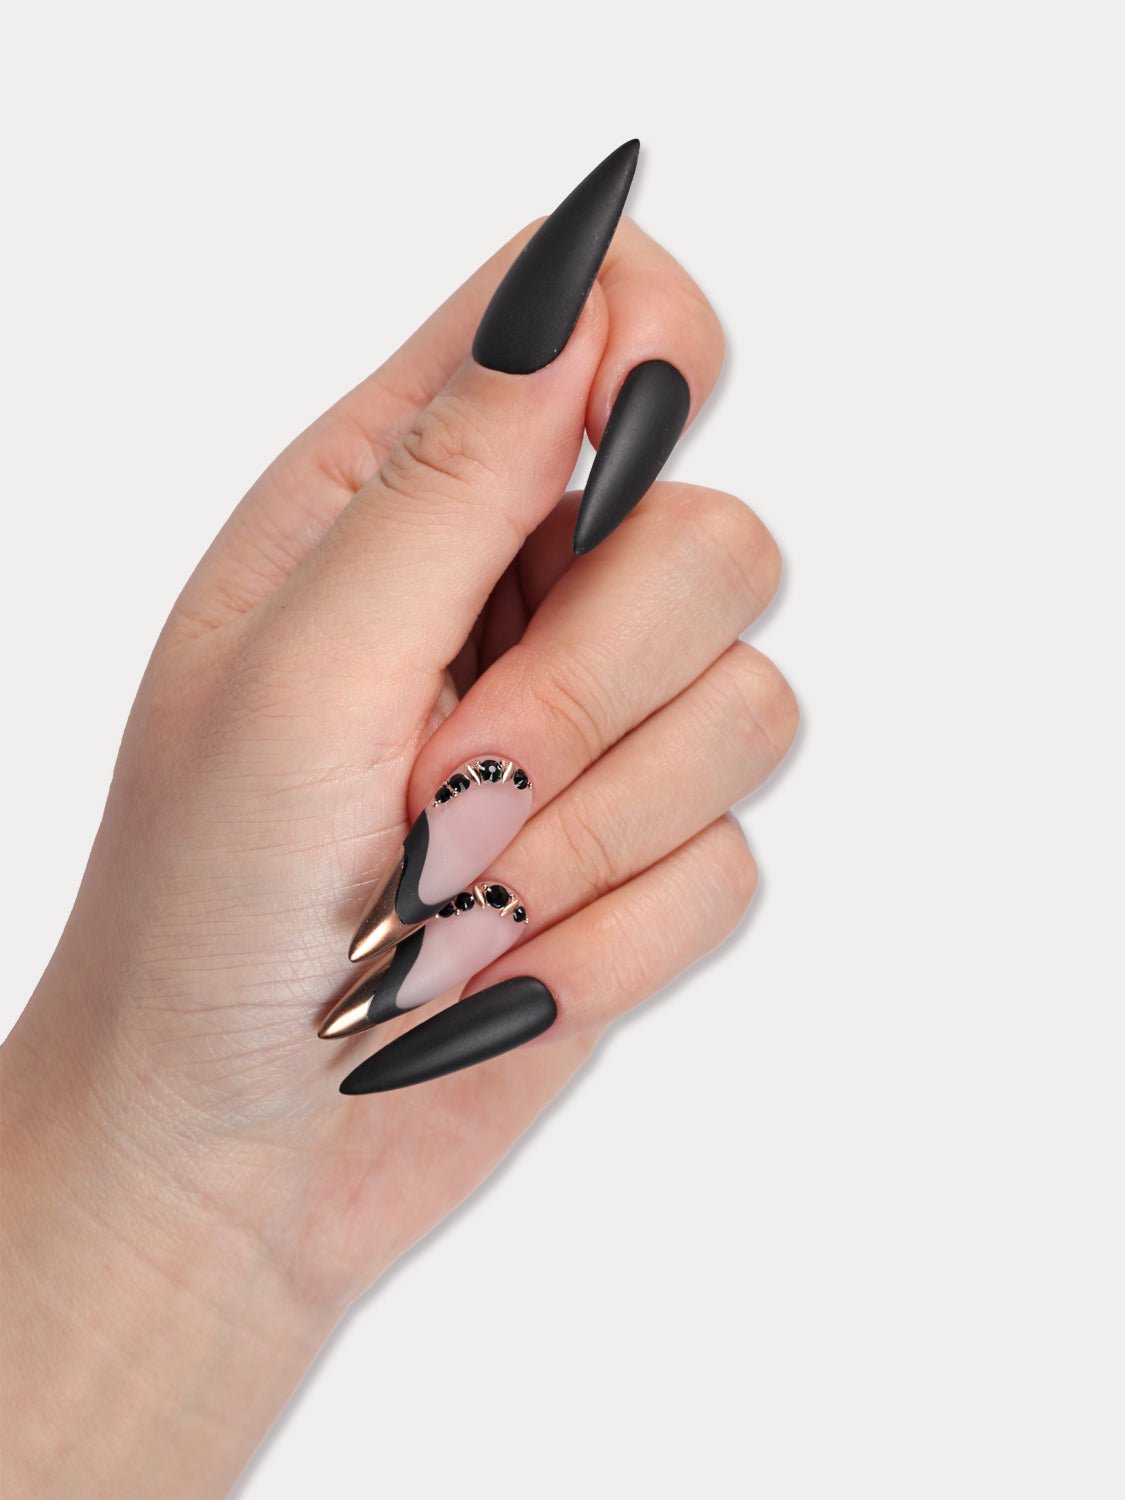 White, black, gold stud nails | Jordie M.'s (jordie_m) Photo | Beautylish